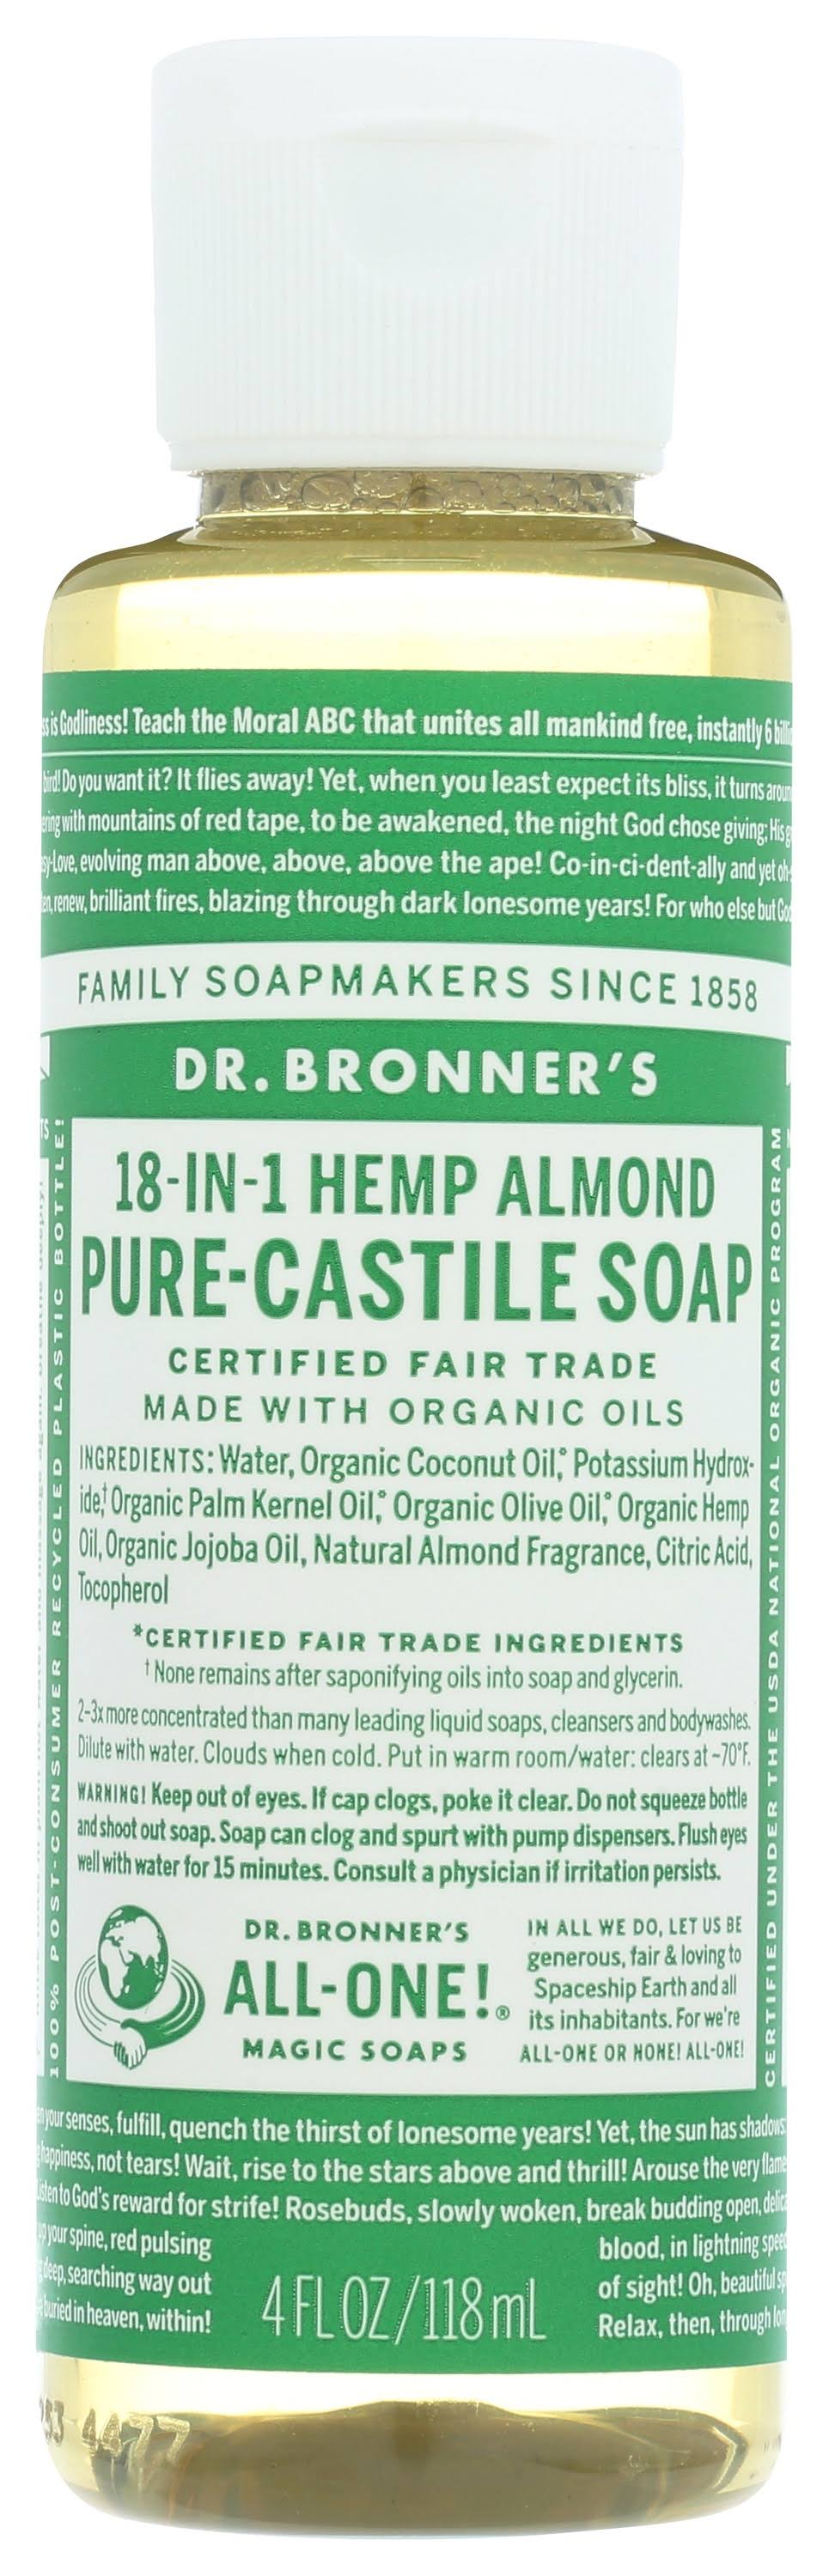 Dr. Bronner's Magic Soaps Pure-Castile Soap 18-in-1 Hemp - Almond